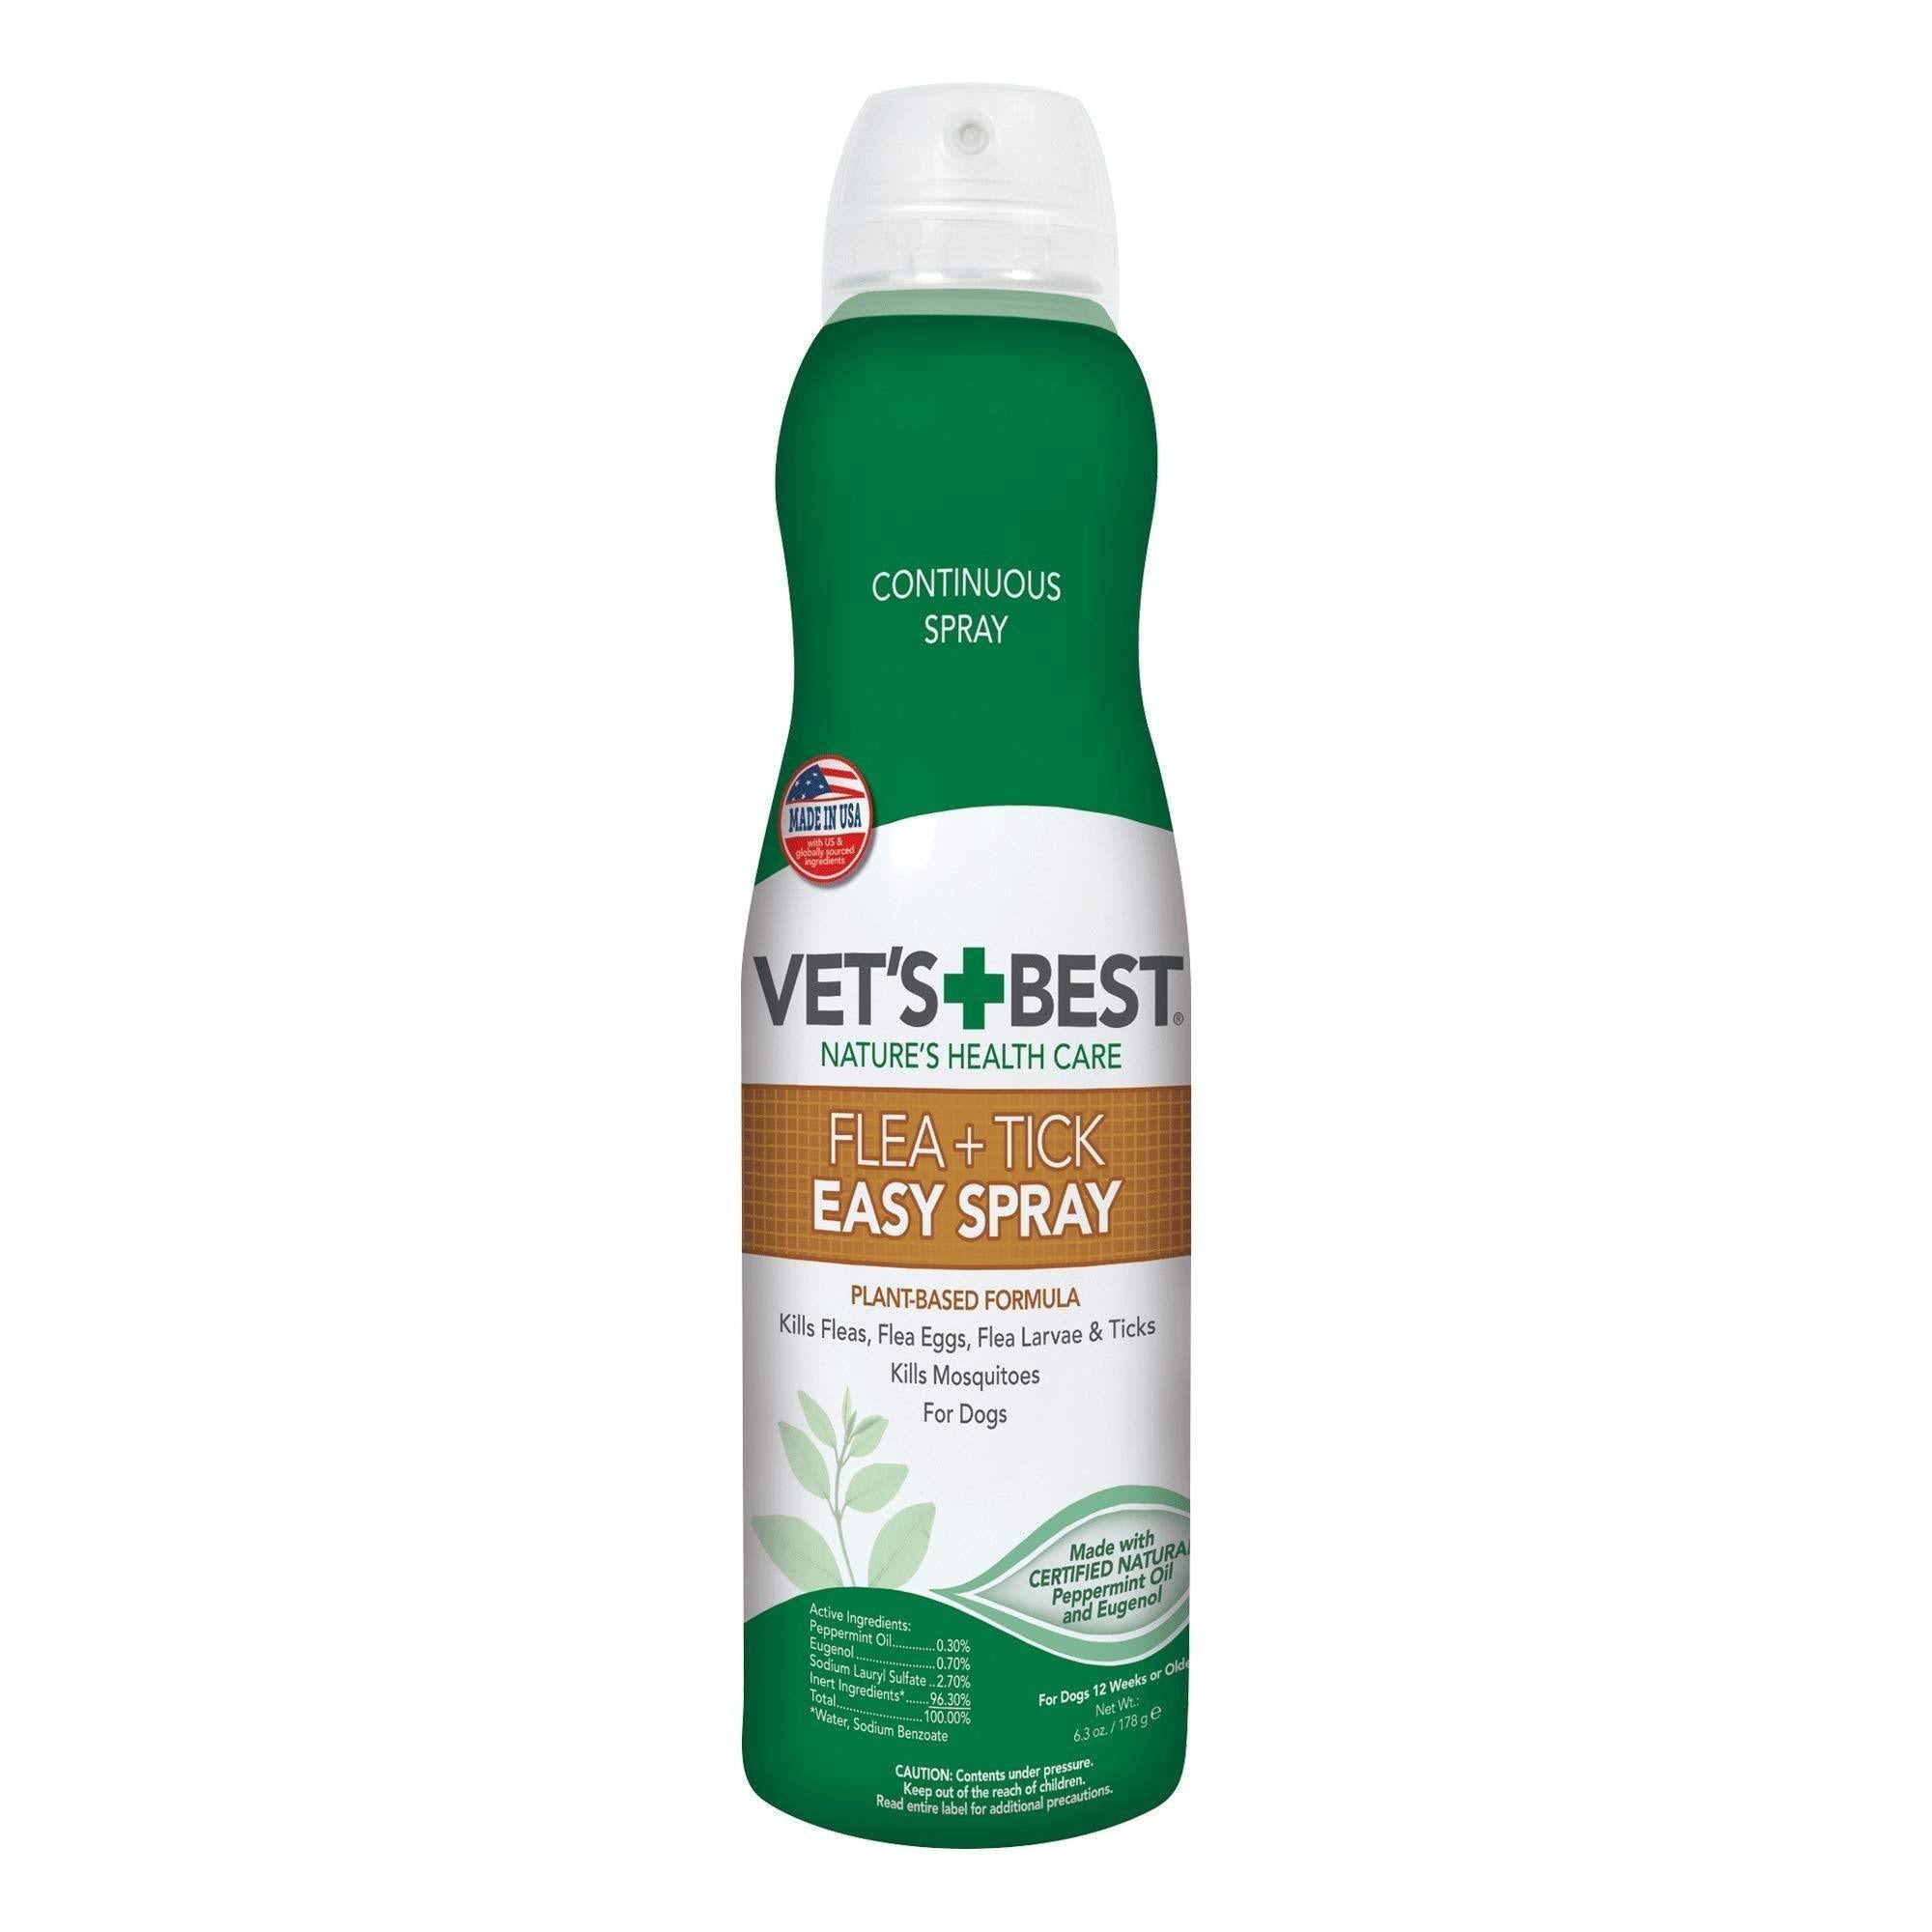 Vet's Best Flea Tick Home and Go Spray - 6.3oz